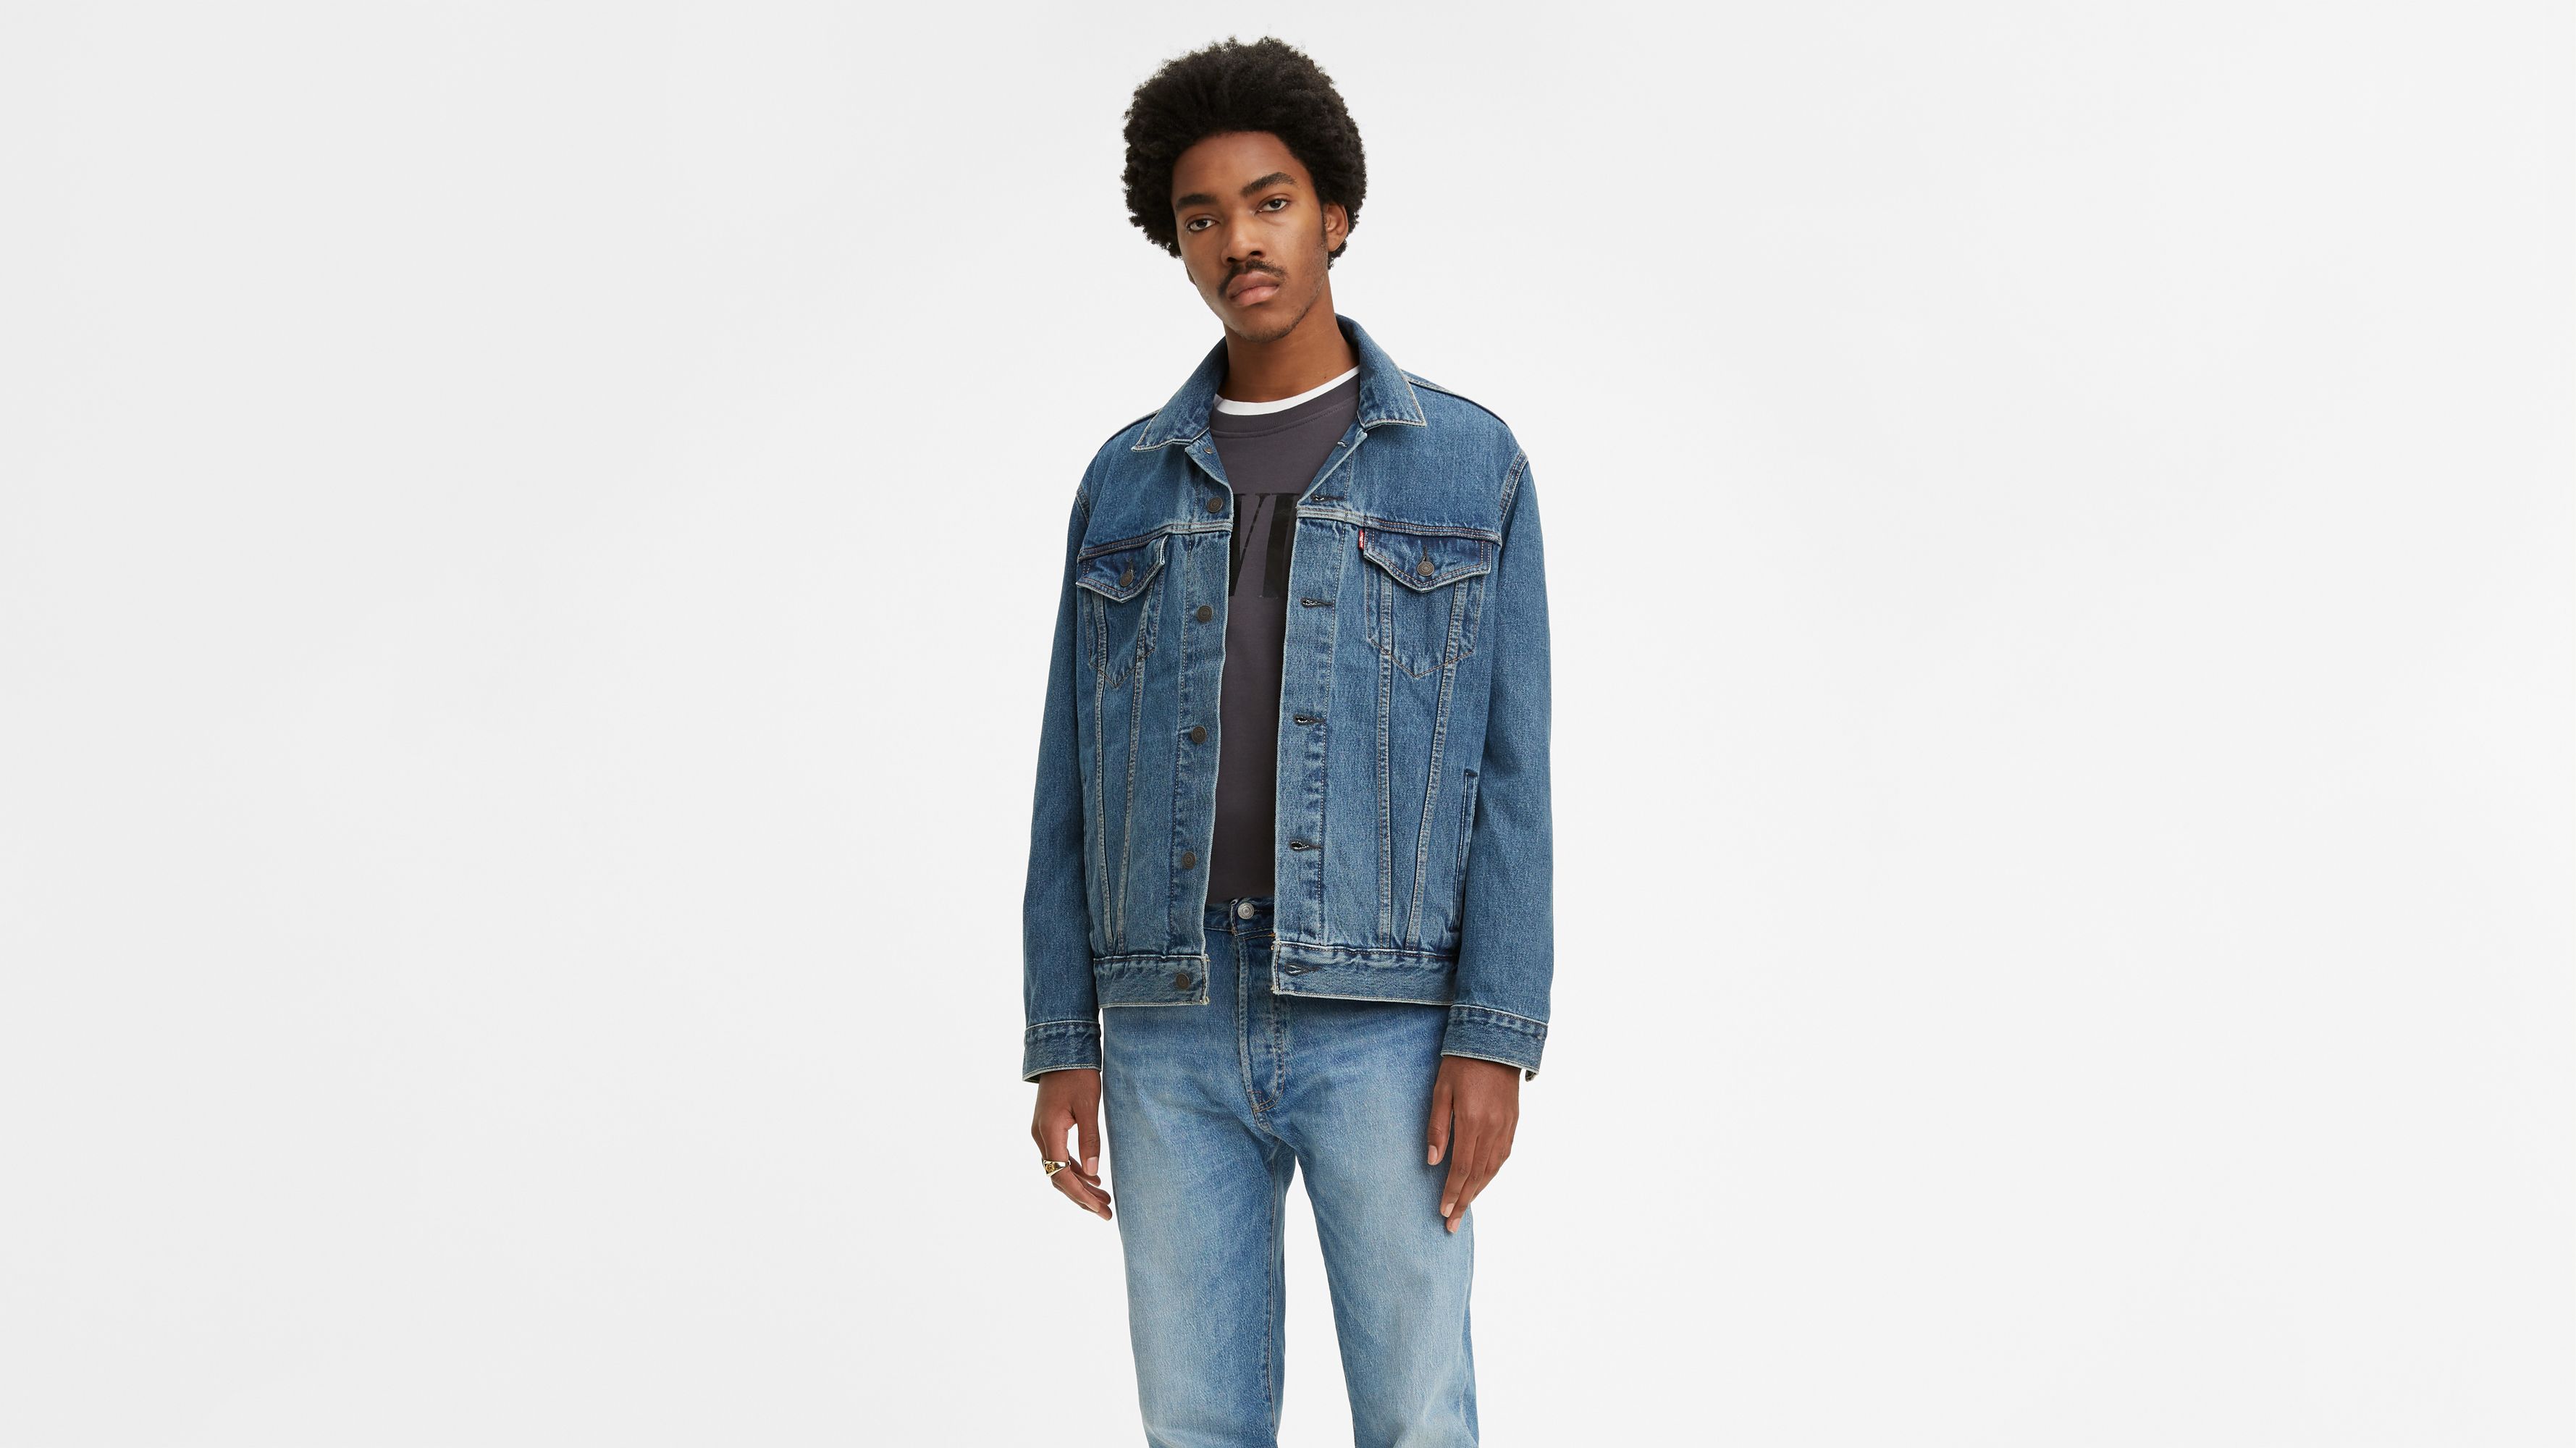 Men's Thin Jeans Cowboy Jacket, Boy Teenage Jeans Jacket | Wish